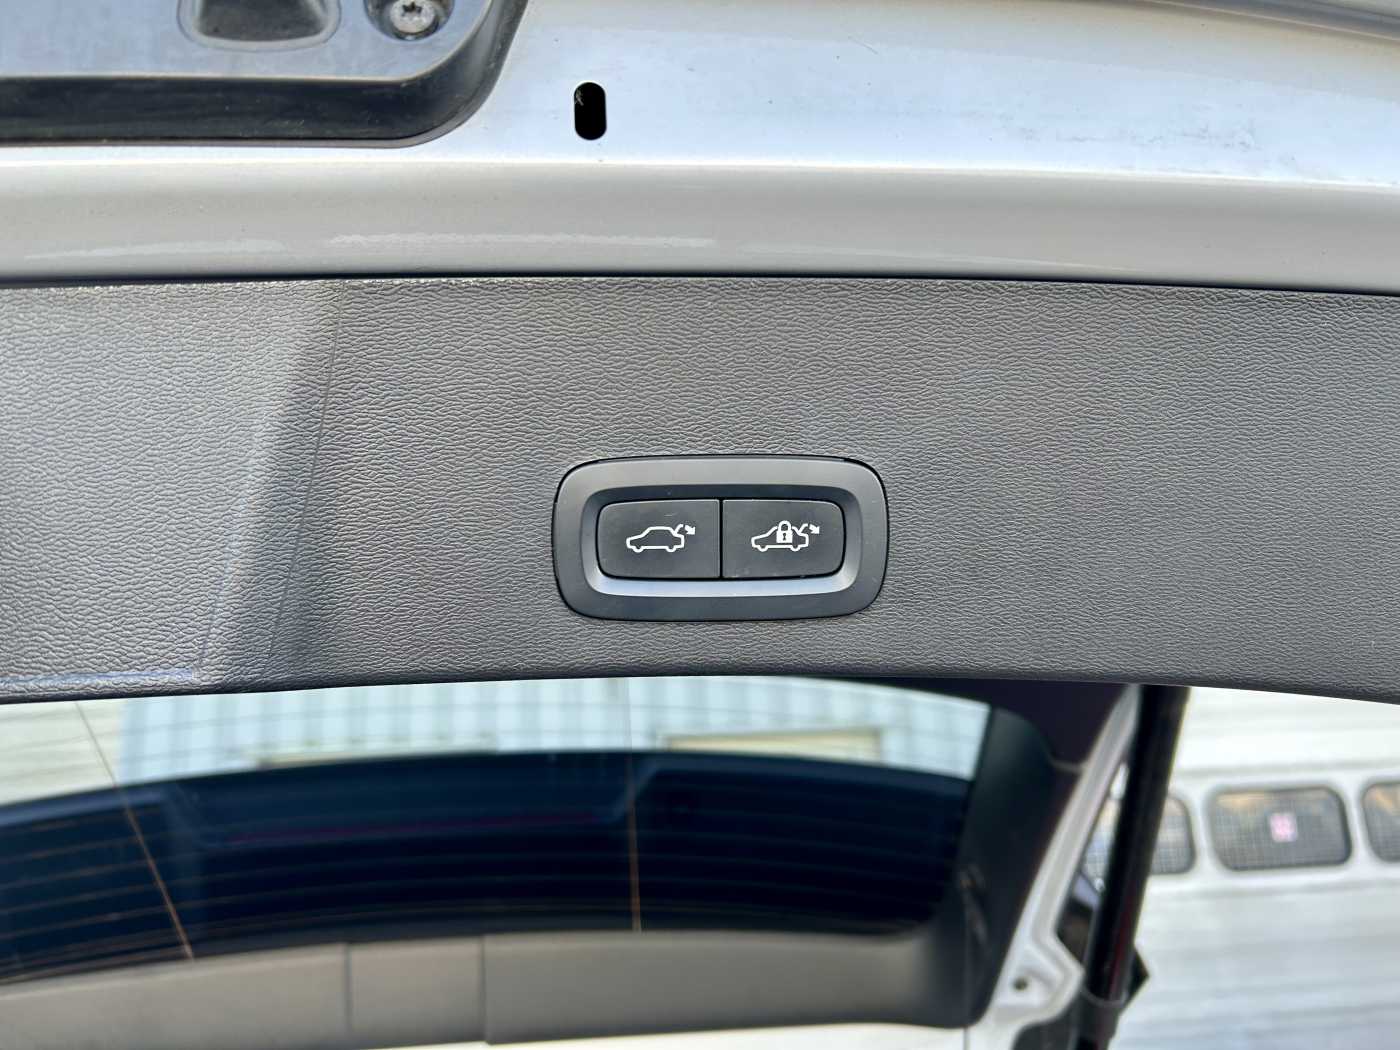 Lacom Volvo - XC40 T5 plug-in R-Design/IntellisafePro/WinterPro/Camera